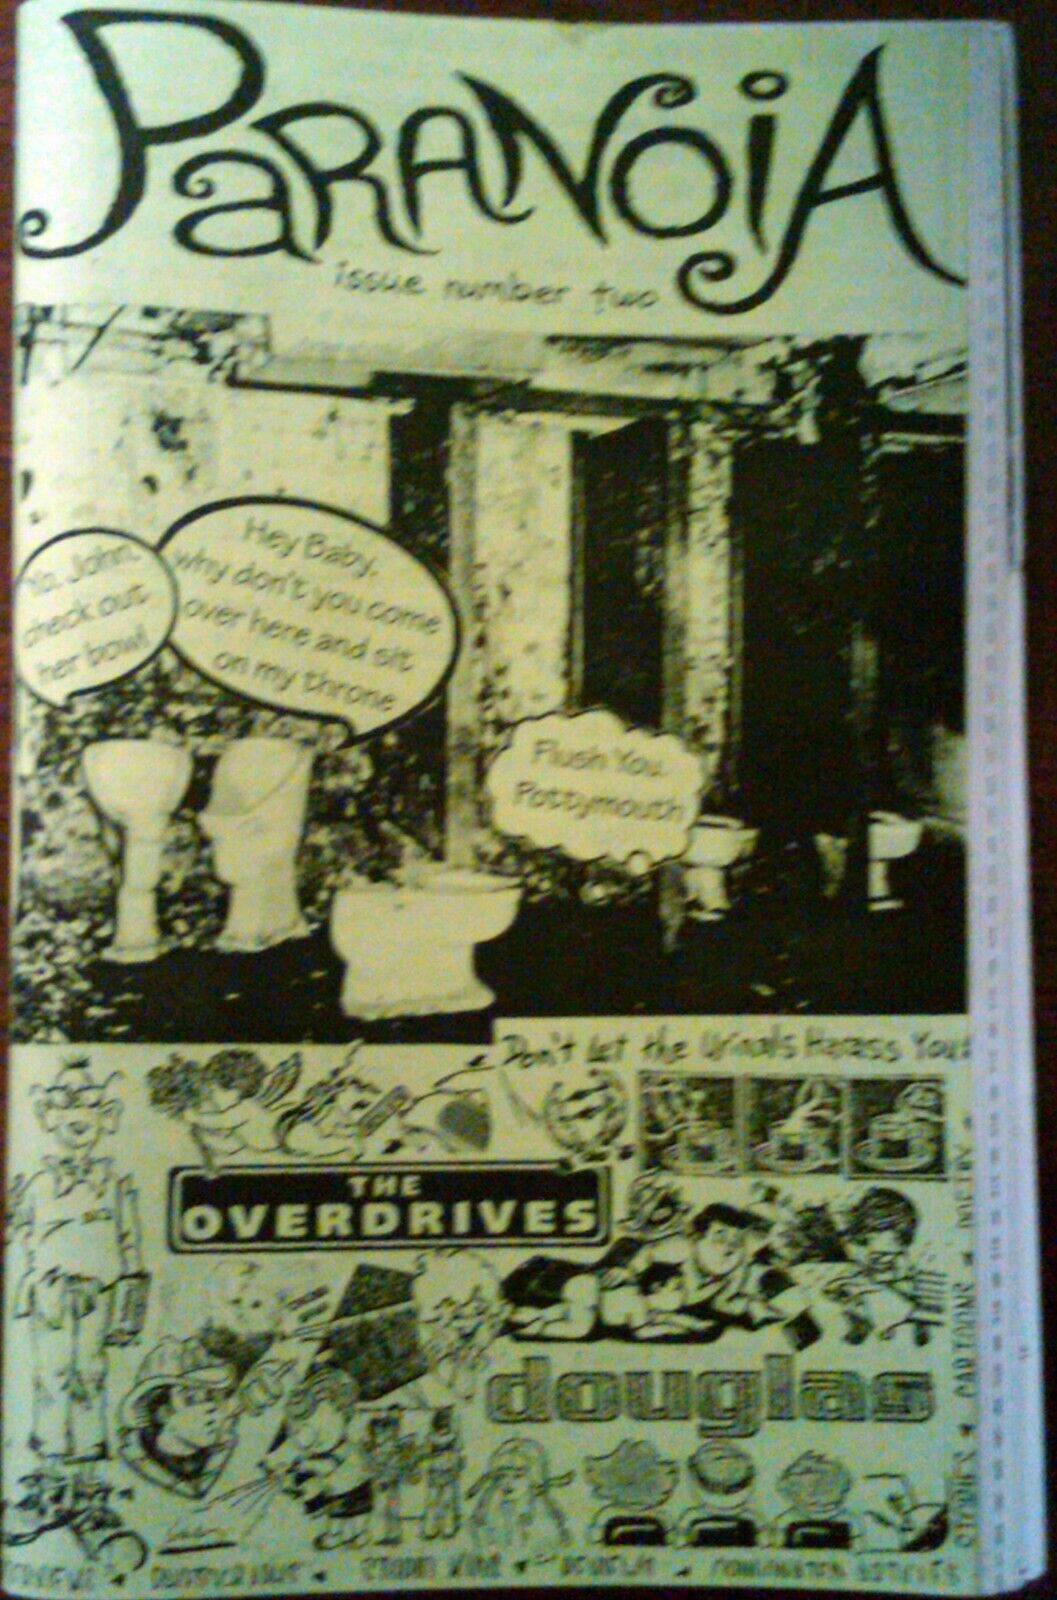 PARANOIA photocopy semi per music fanzine overdrives douglas #2 comics njpp zine